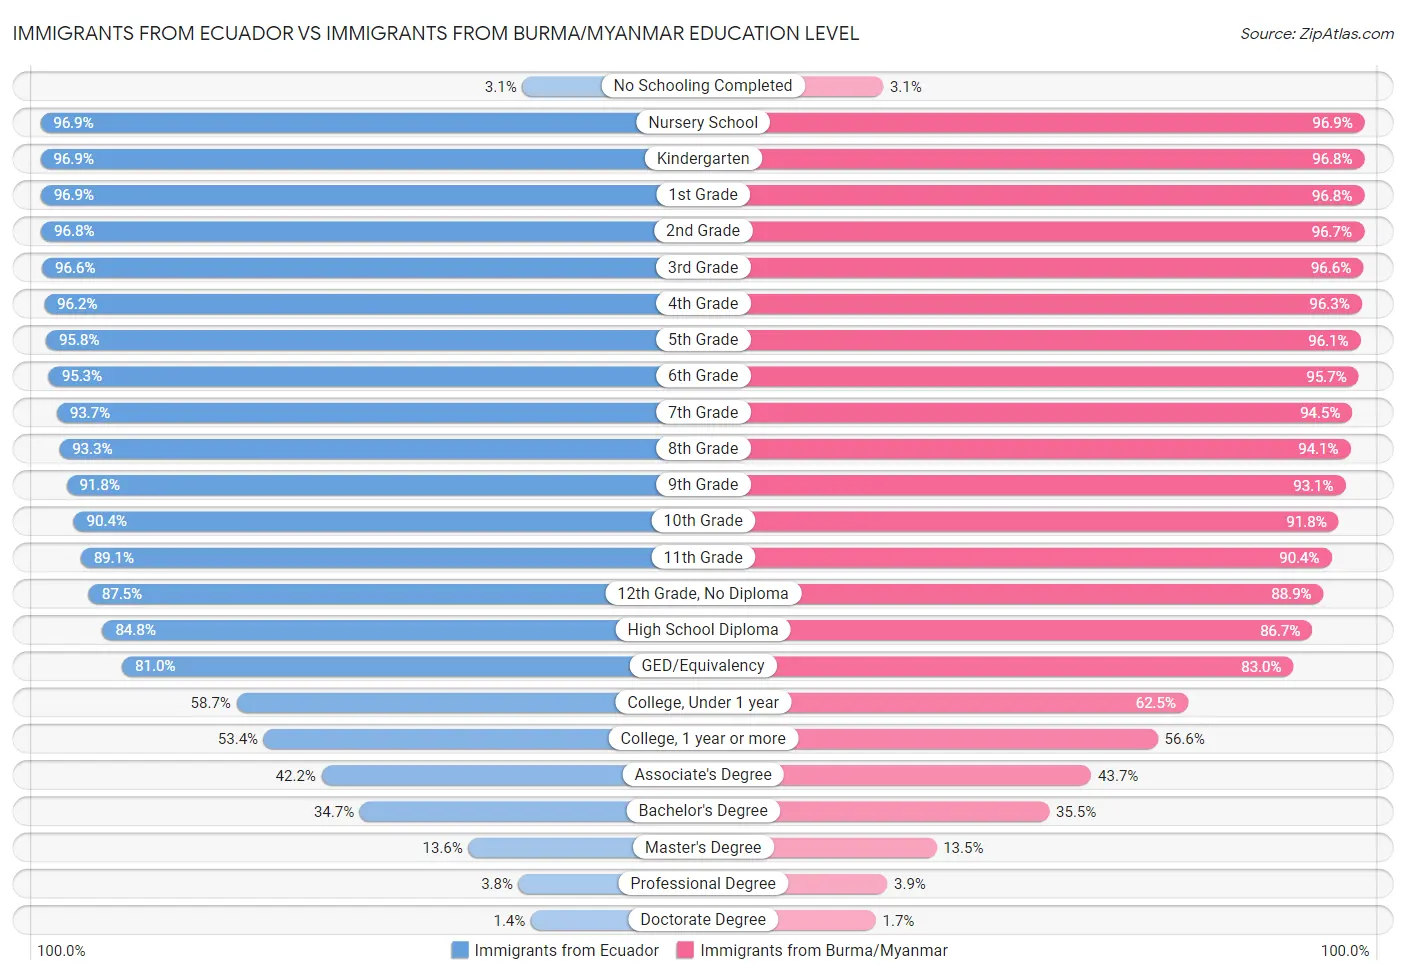 Immigrants from Ecuador vs Immigrants from Burma/Myanmar Education Level